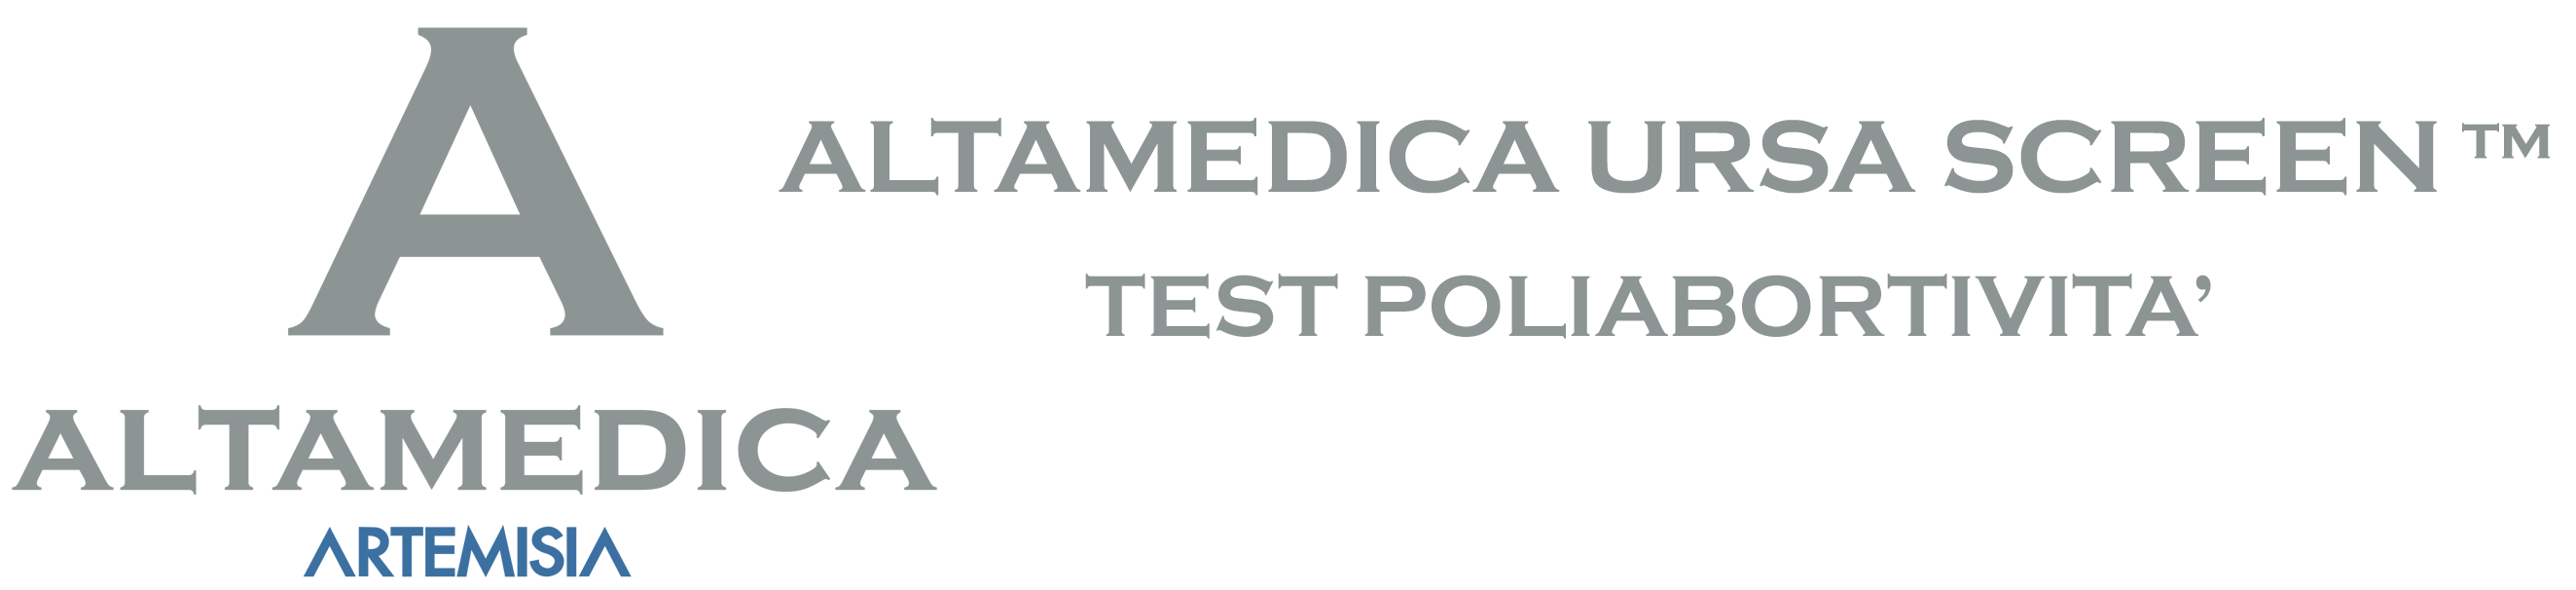 Test Poliabortività – UrsaScreen